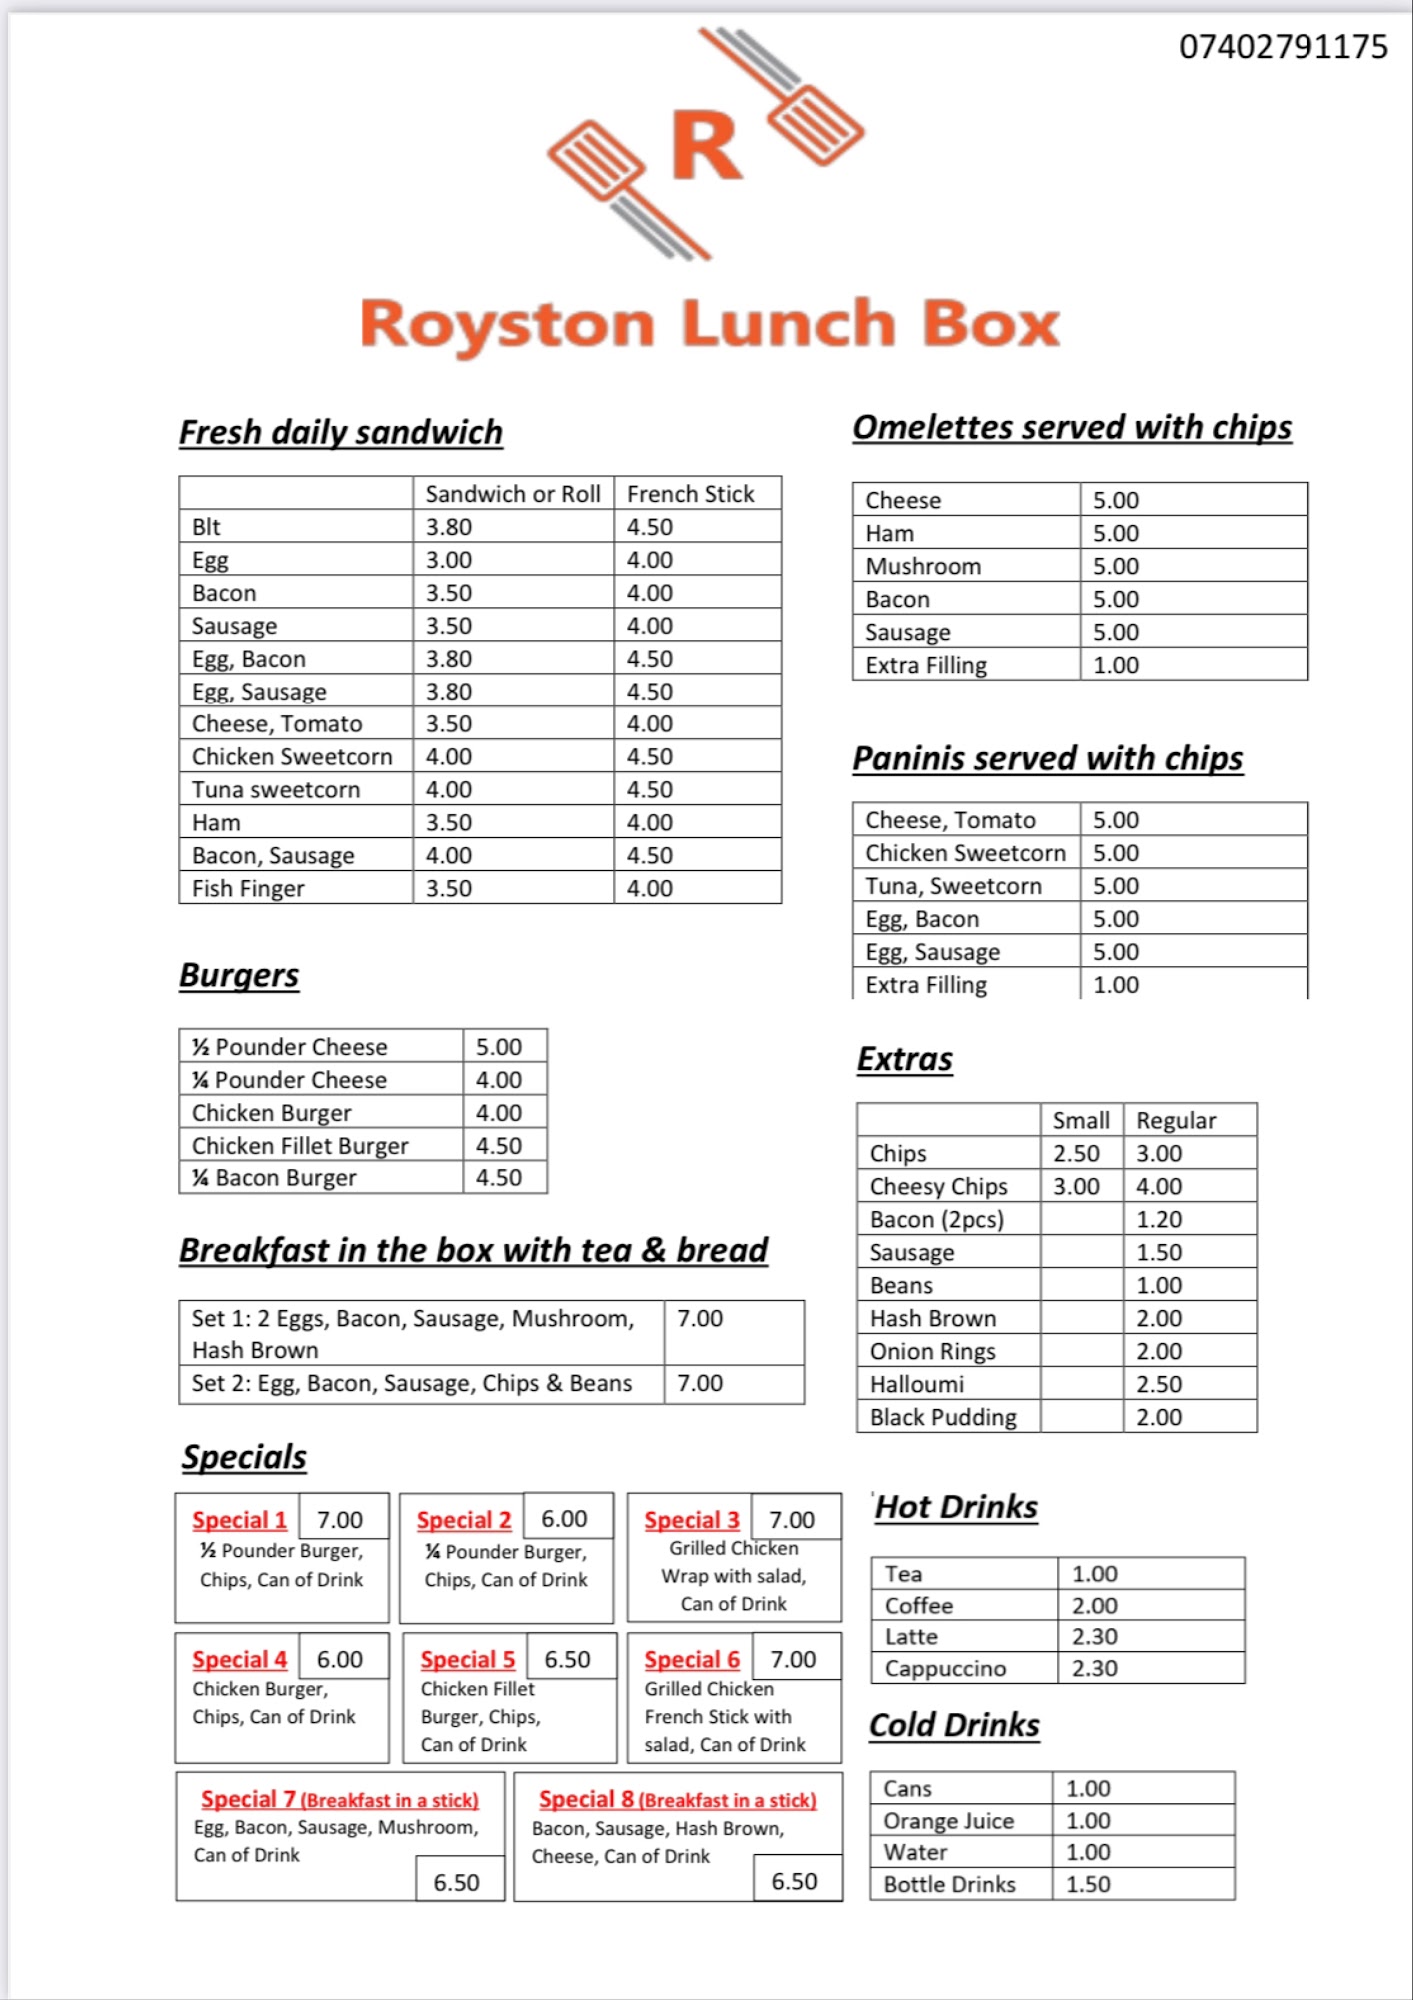 Royston Lunch Box